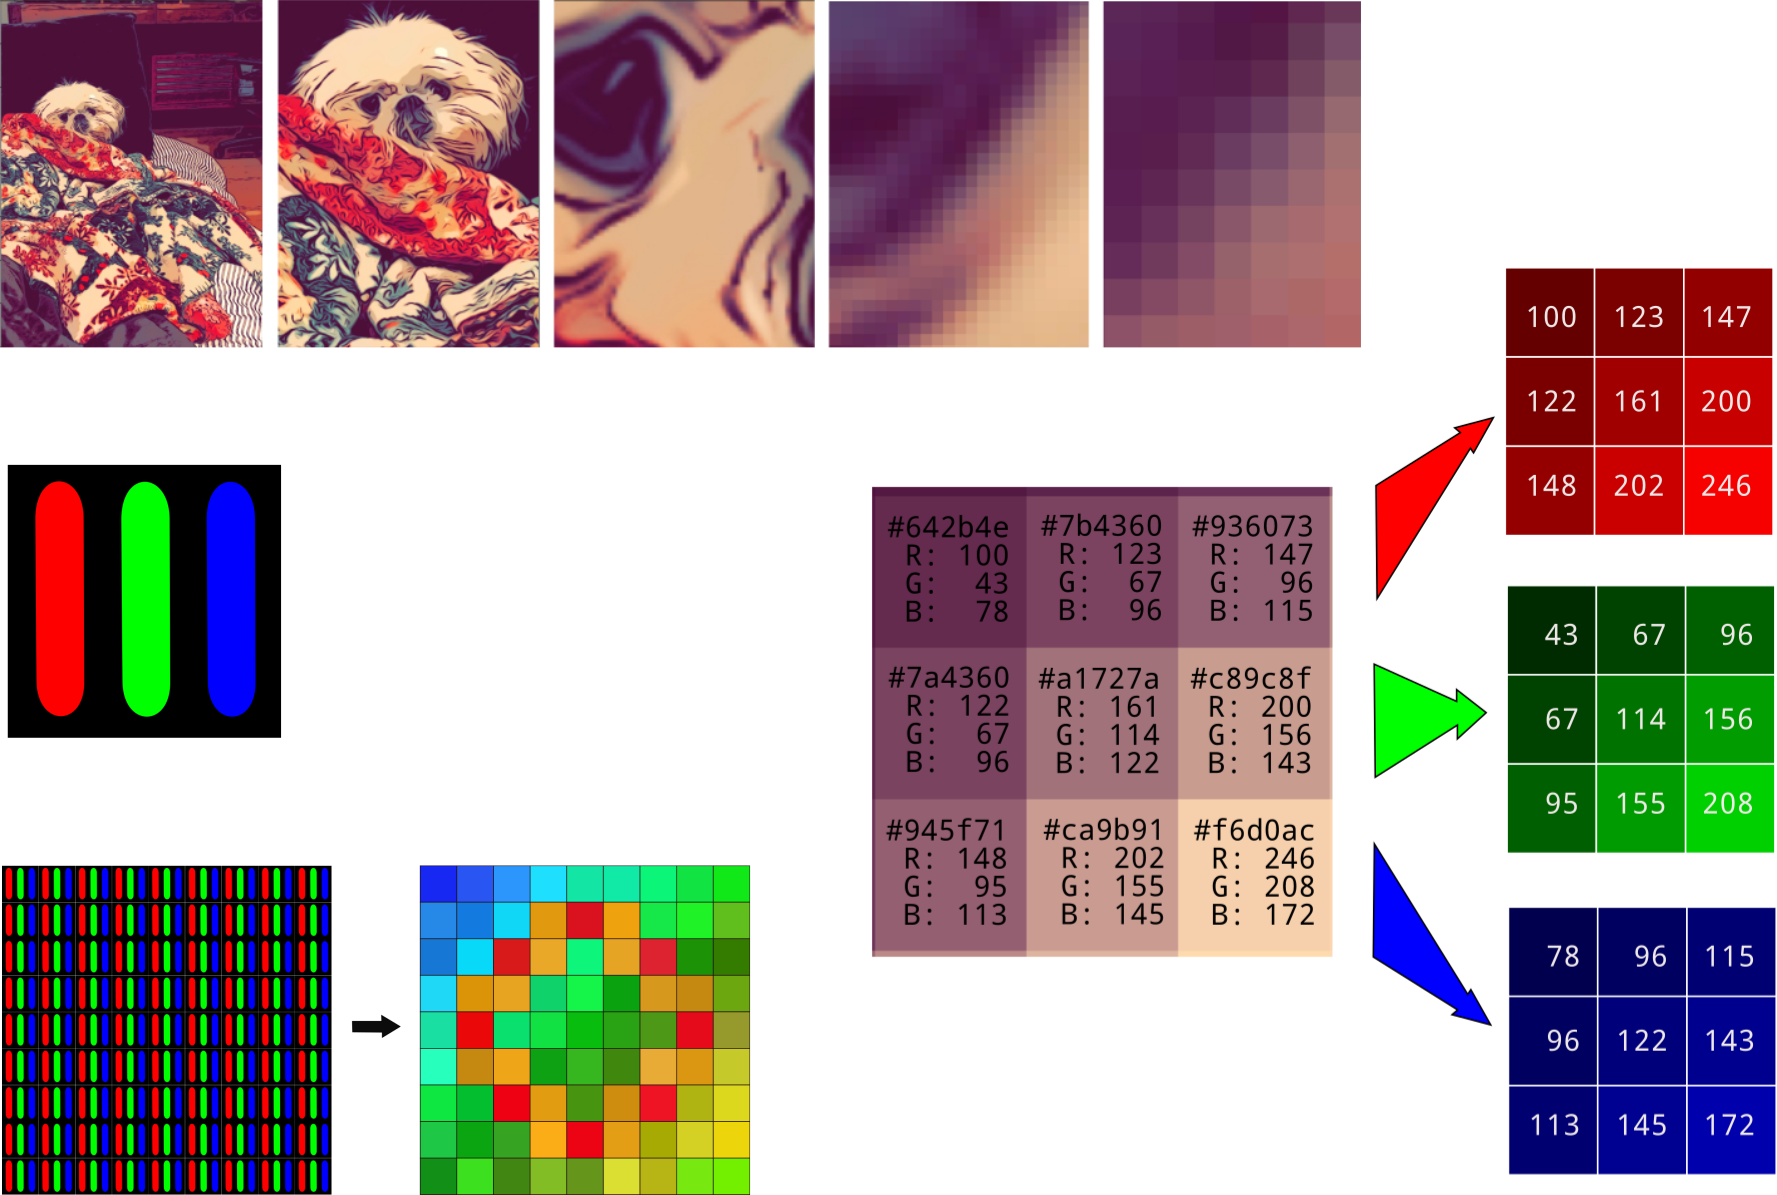 Image quantification montage